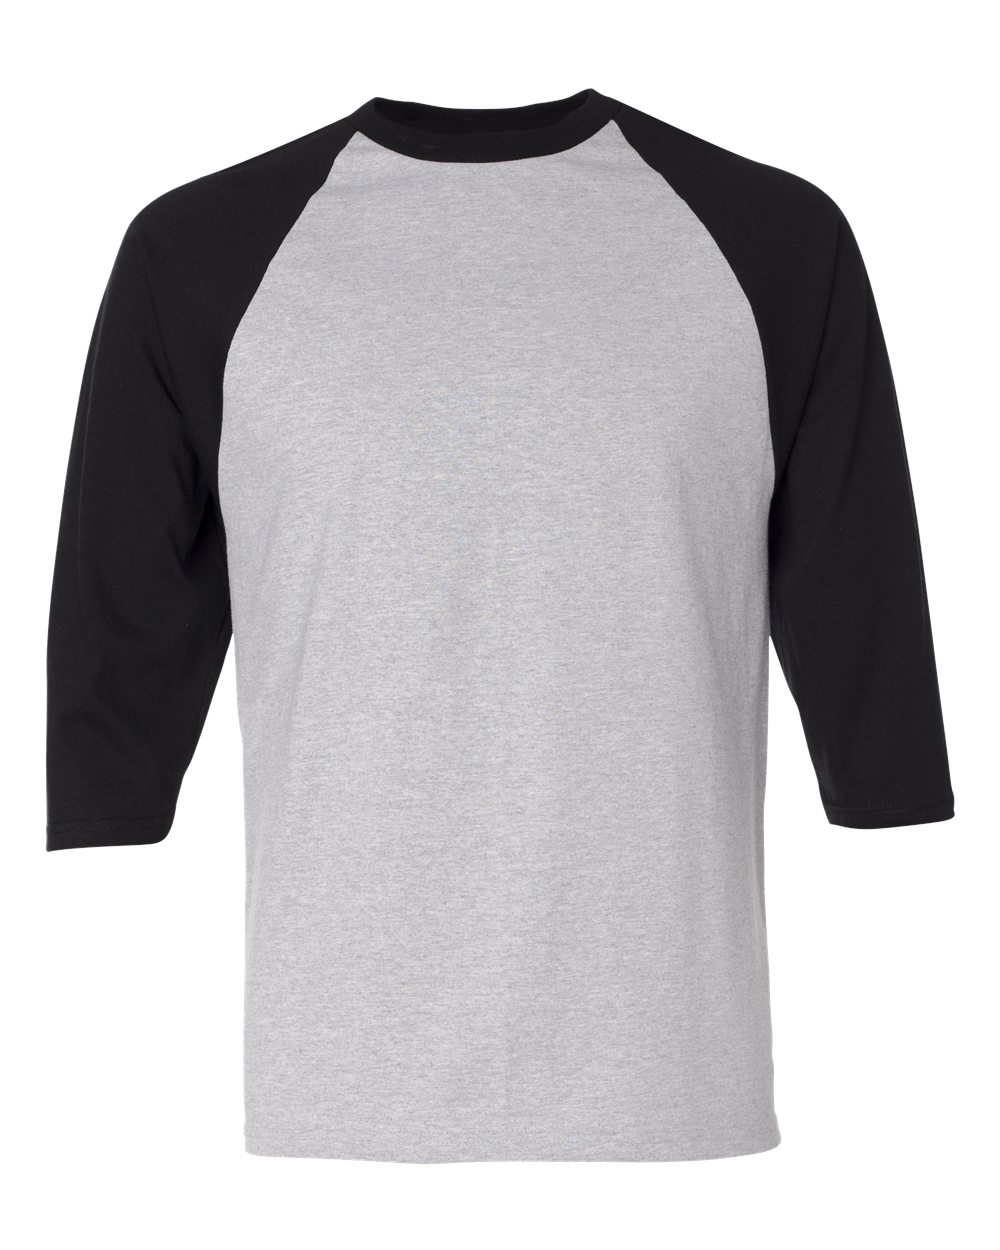 Top Shop Anvil White And Black 3/4 Sleeve Raglan Baseball T-Shirt ...